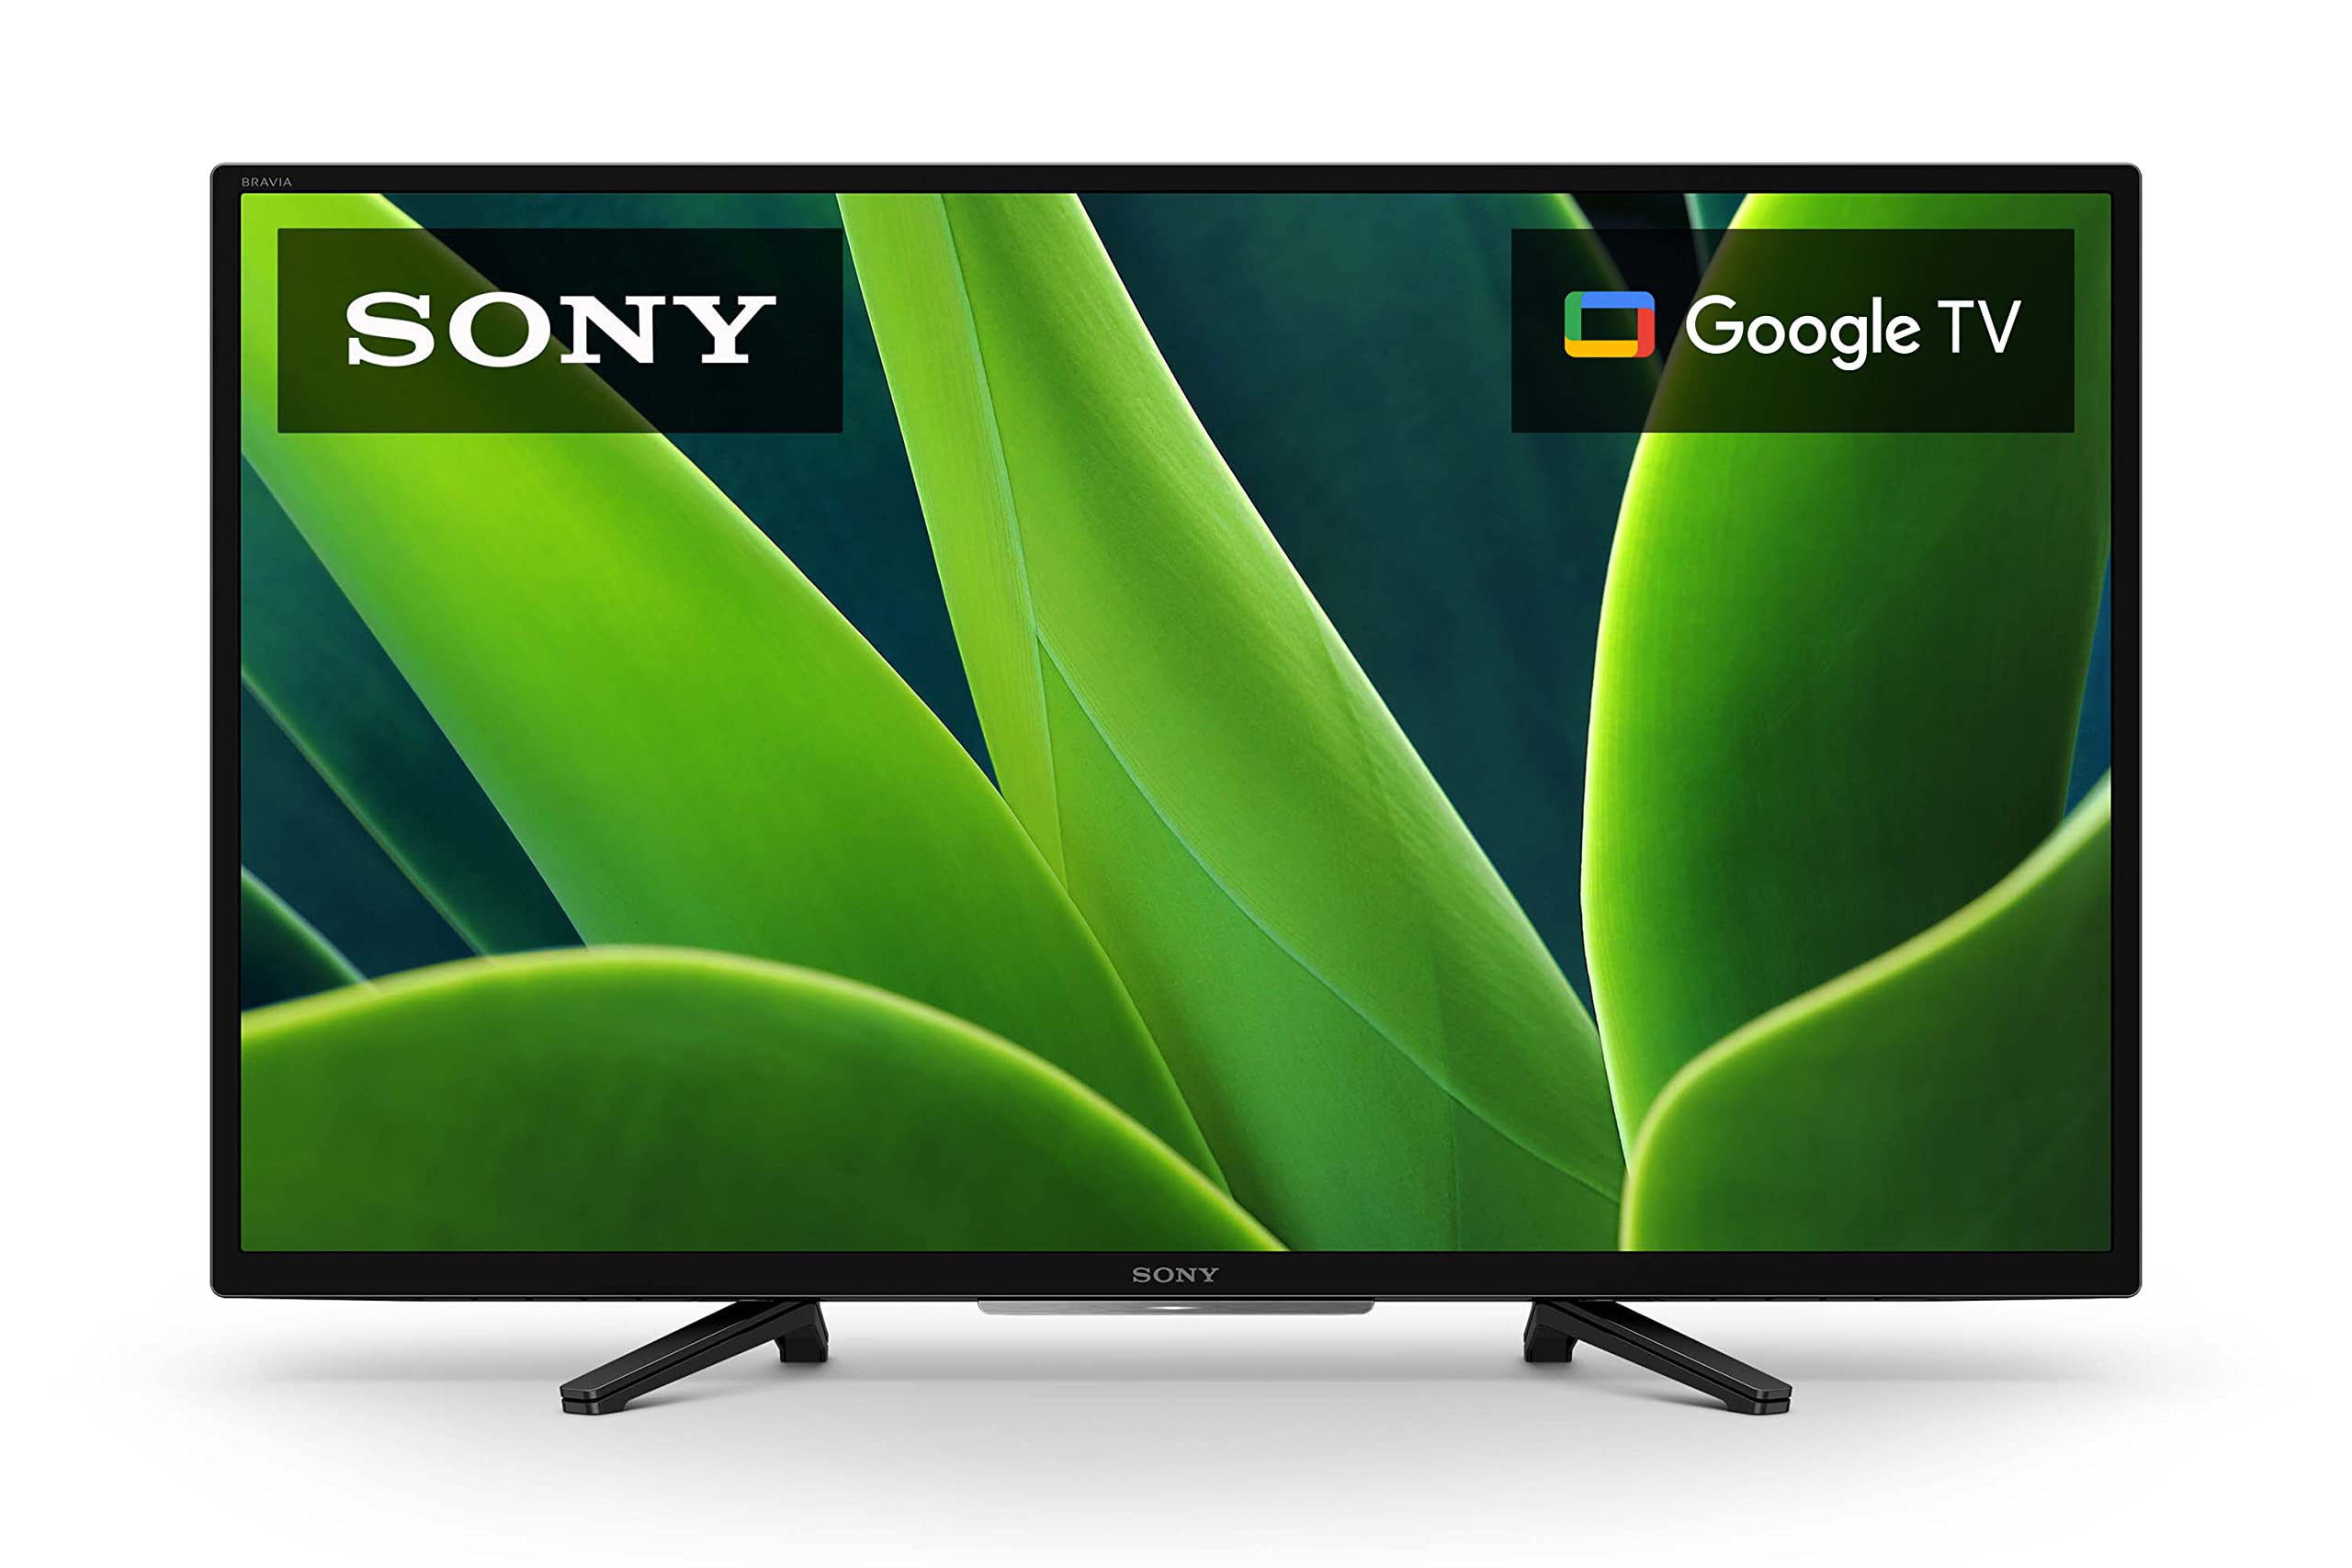 Sony تلفزيون W830K 32 بوصة 720p HD LED HDR مع Google TV...